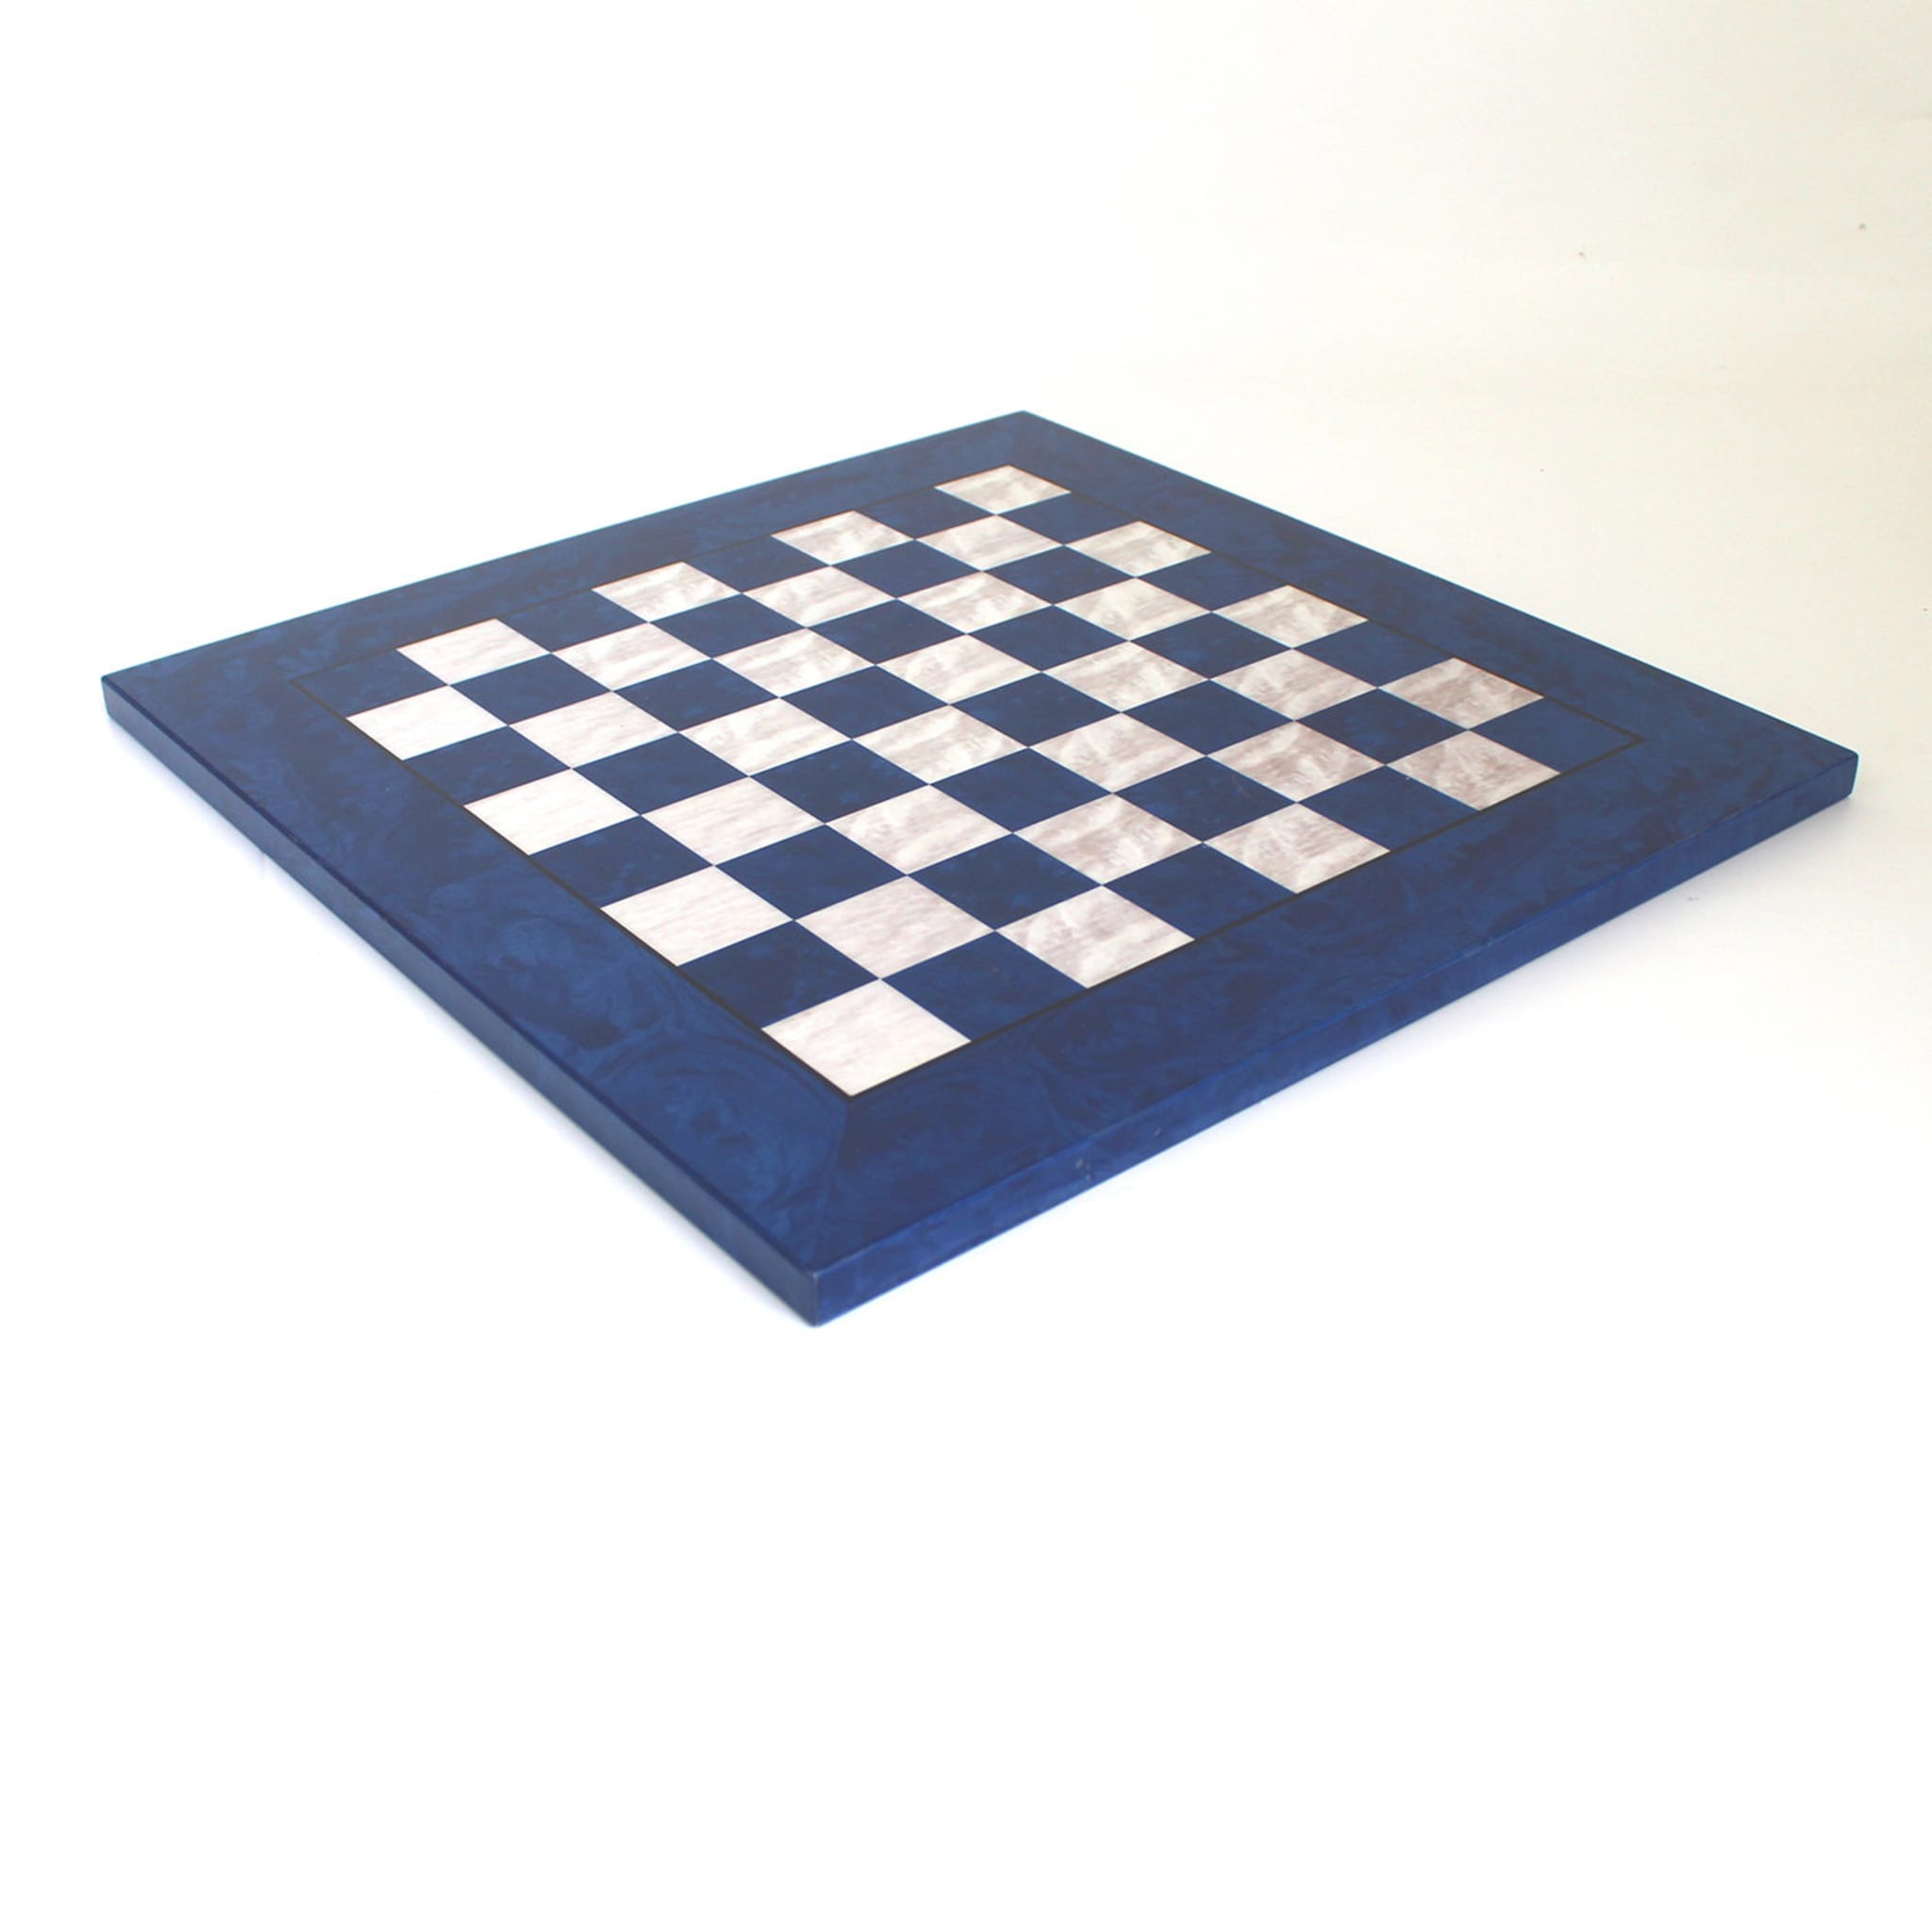 Juego de ajedrez de estilo egipcio - Vista alternativa 1